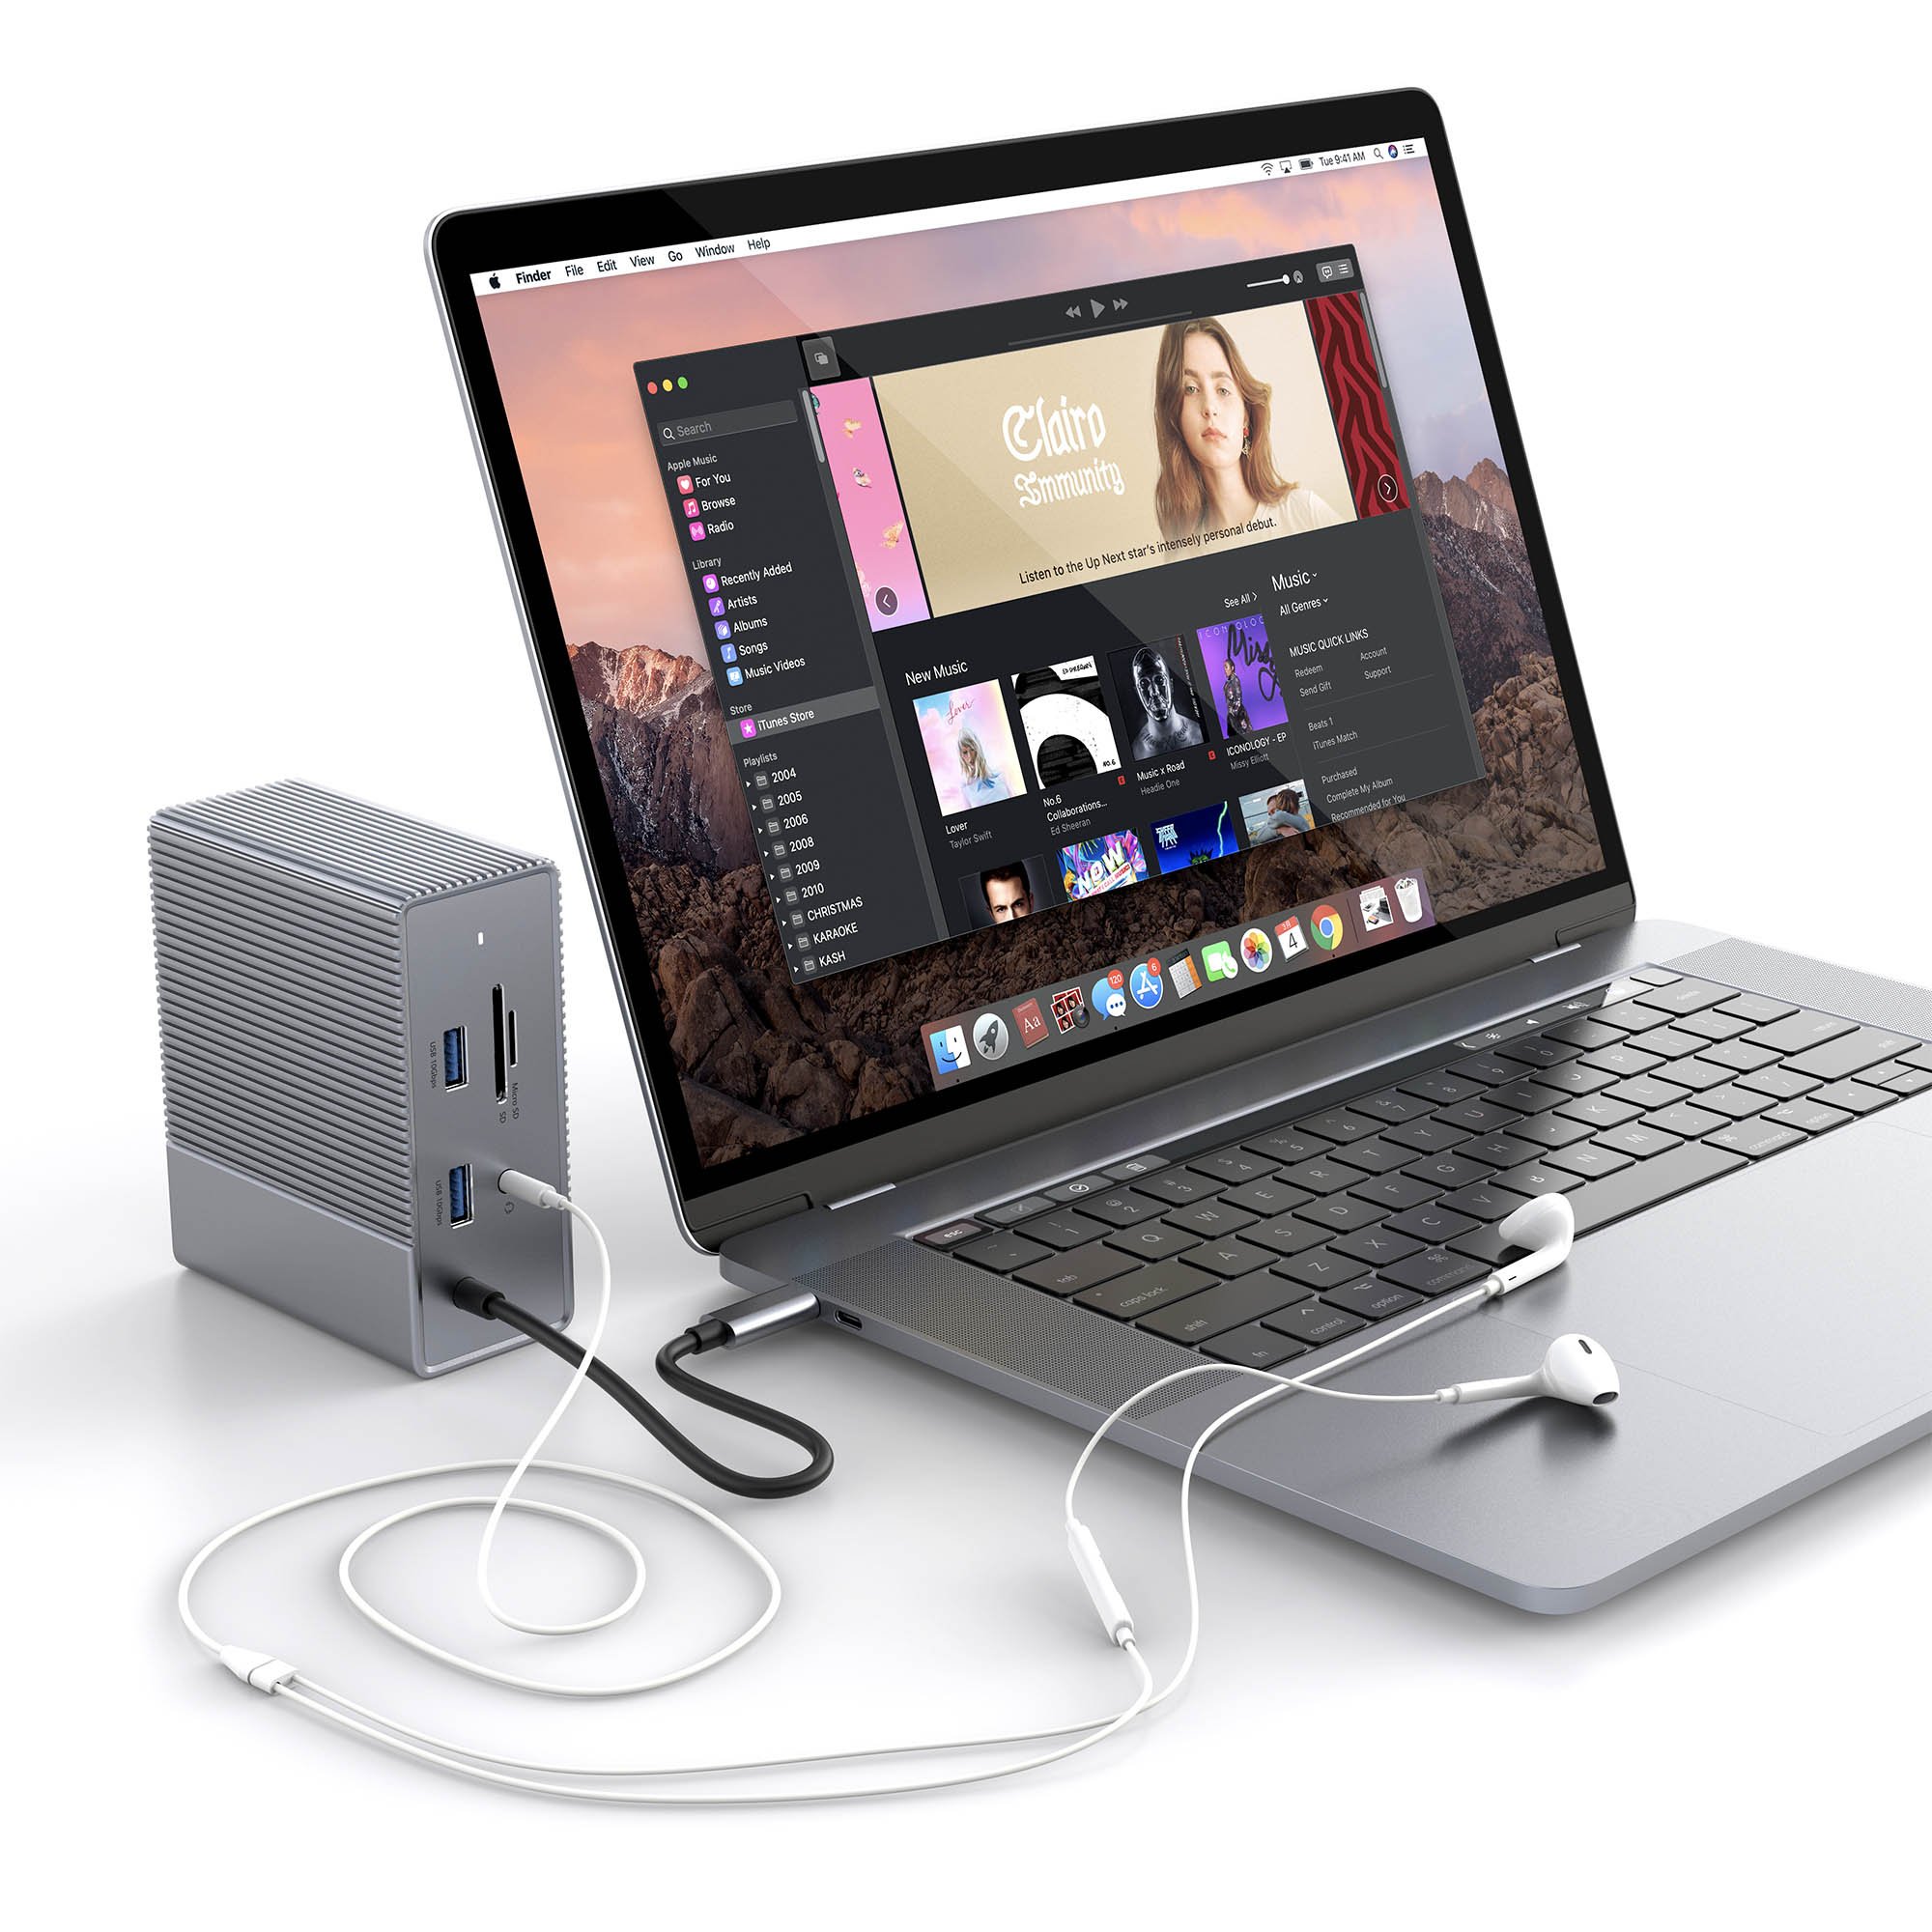 Hyperdrive Gen2 12-In-1 For Macbook, Ipad Pro 2018-2020, PC & Devices (G212)-chính hãng